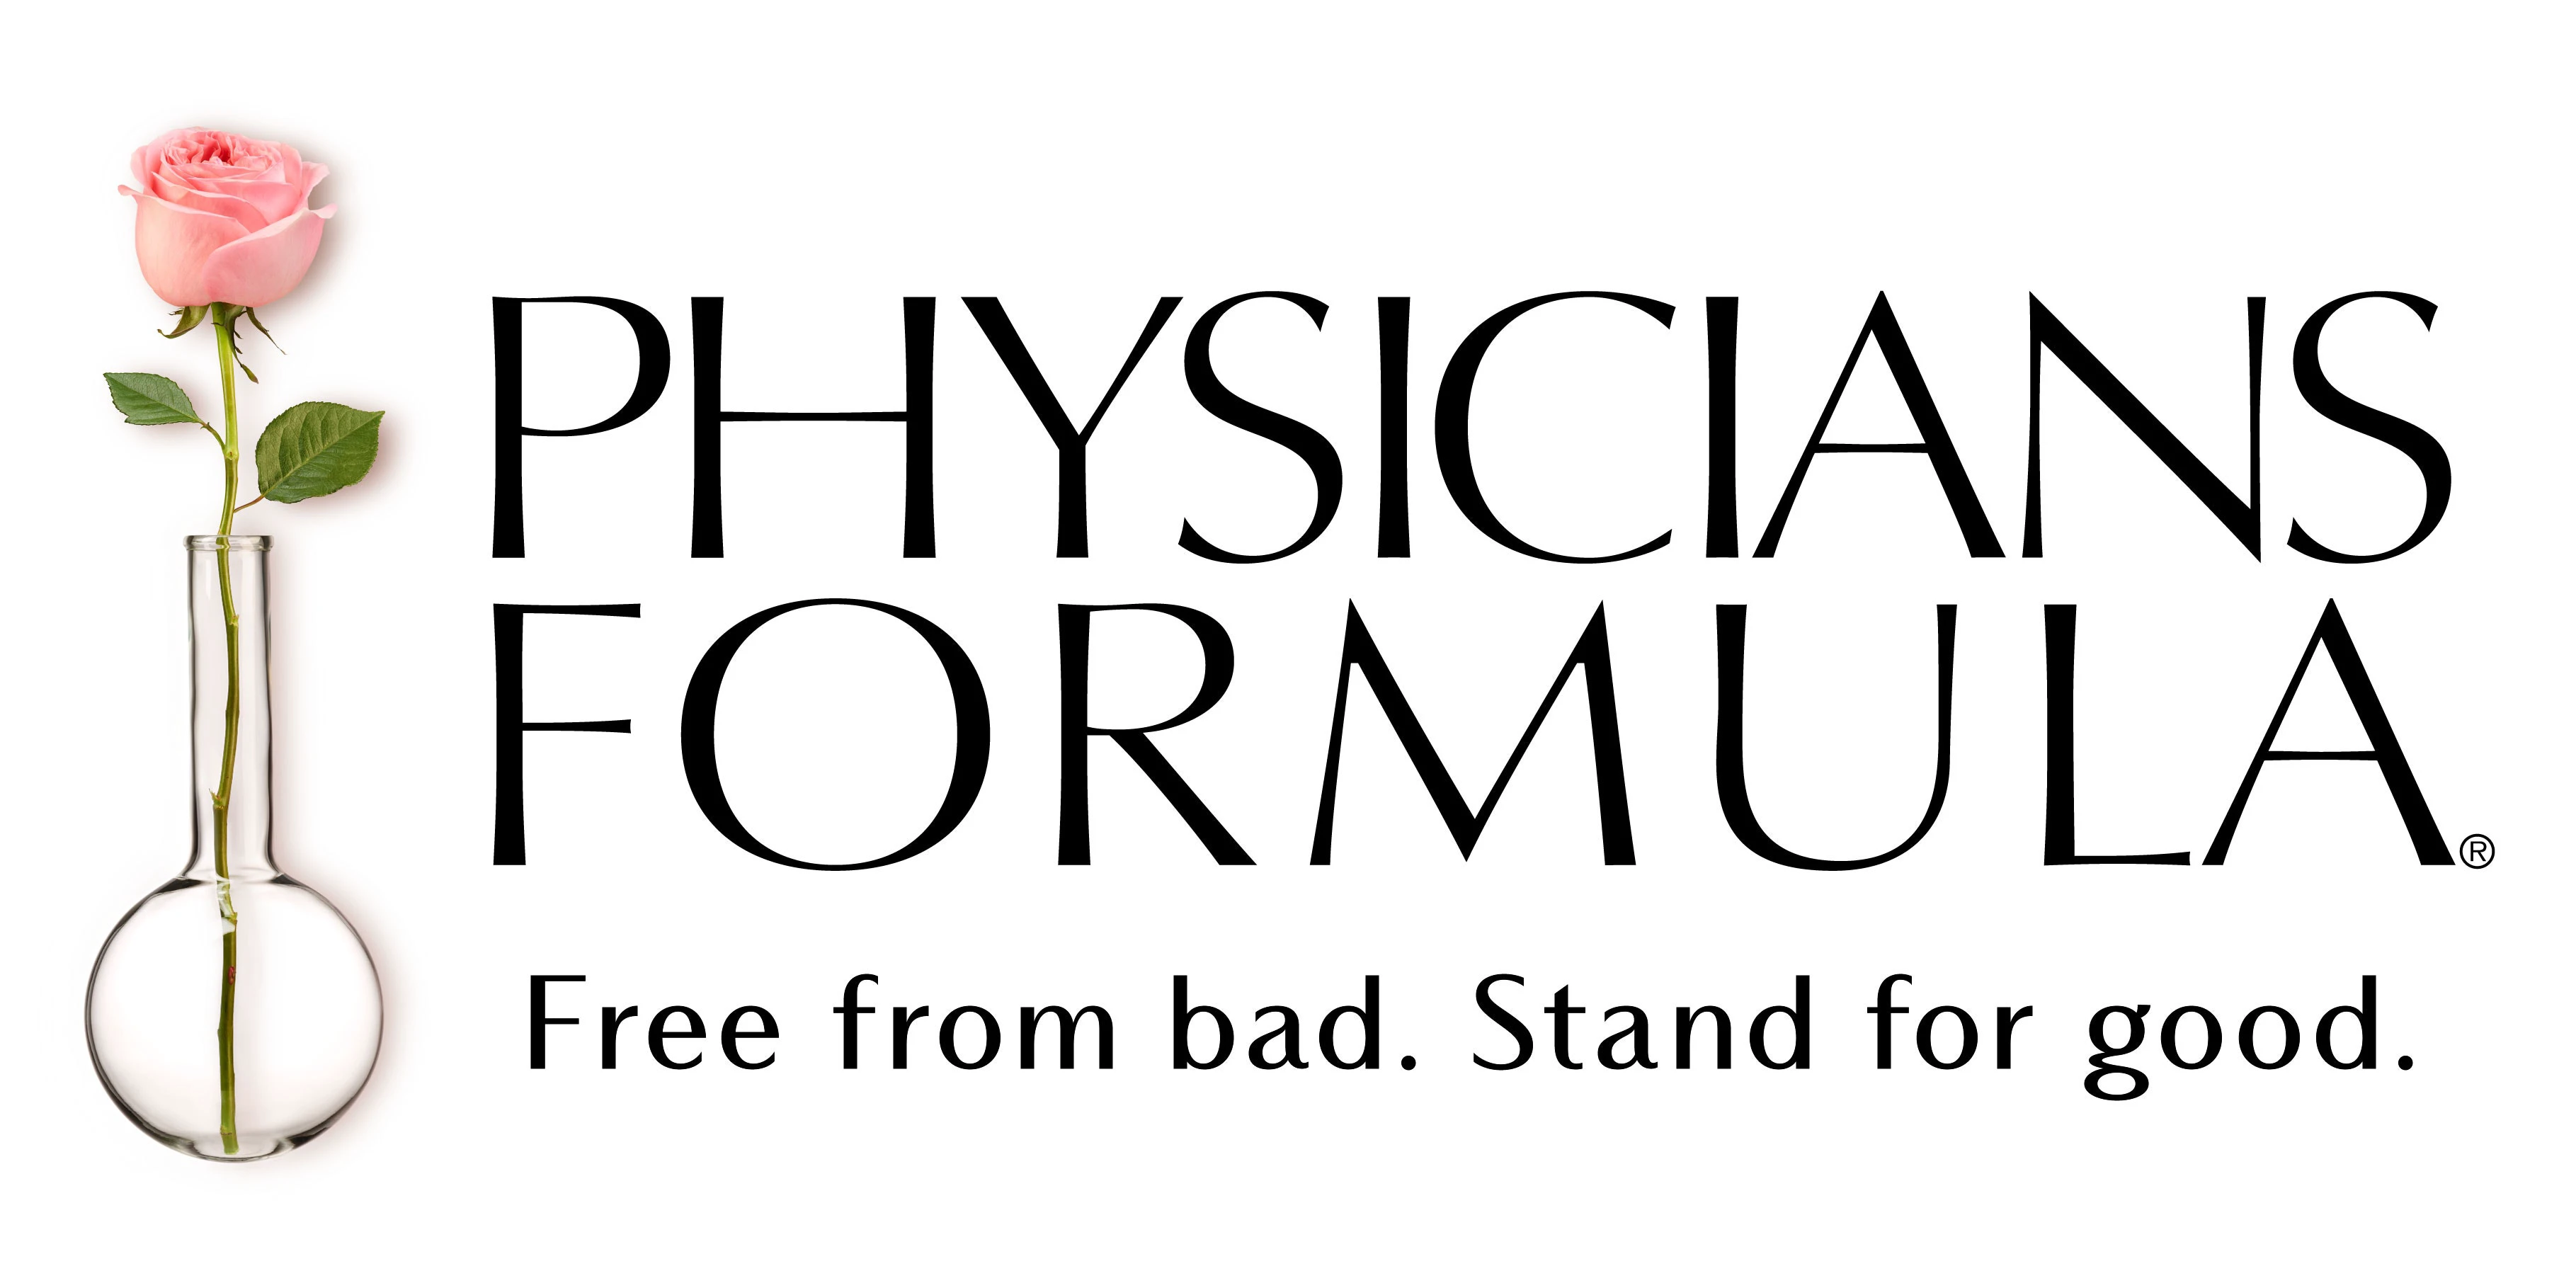 Physicians-formula